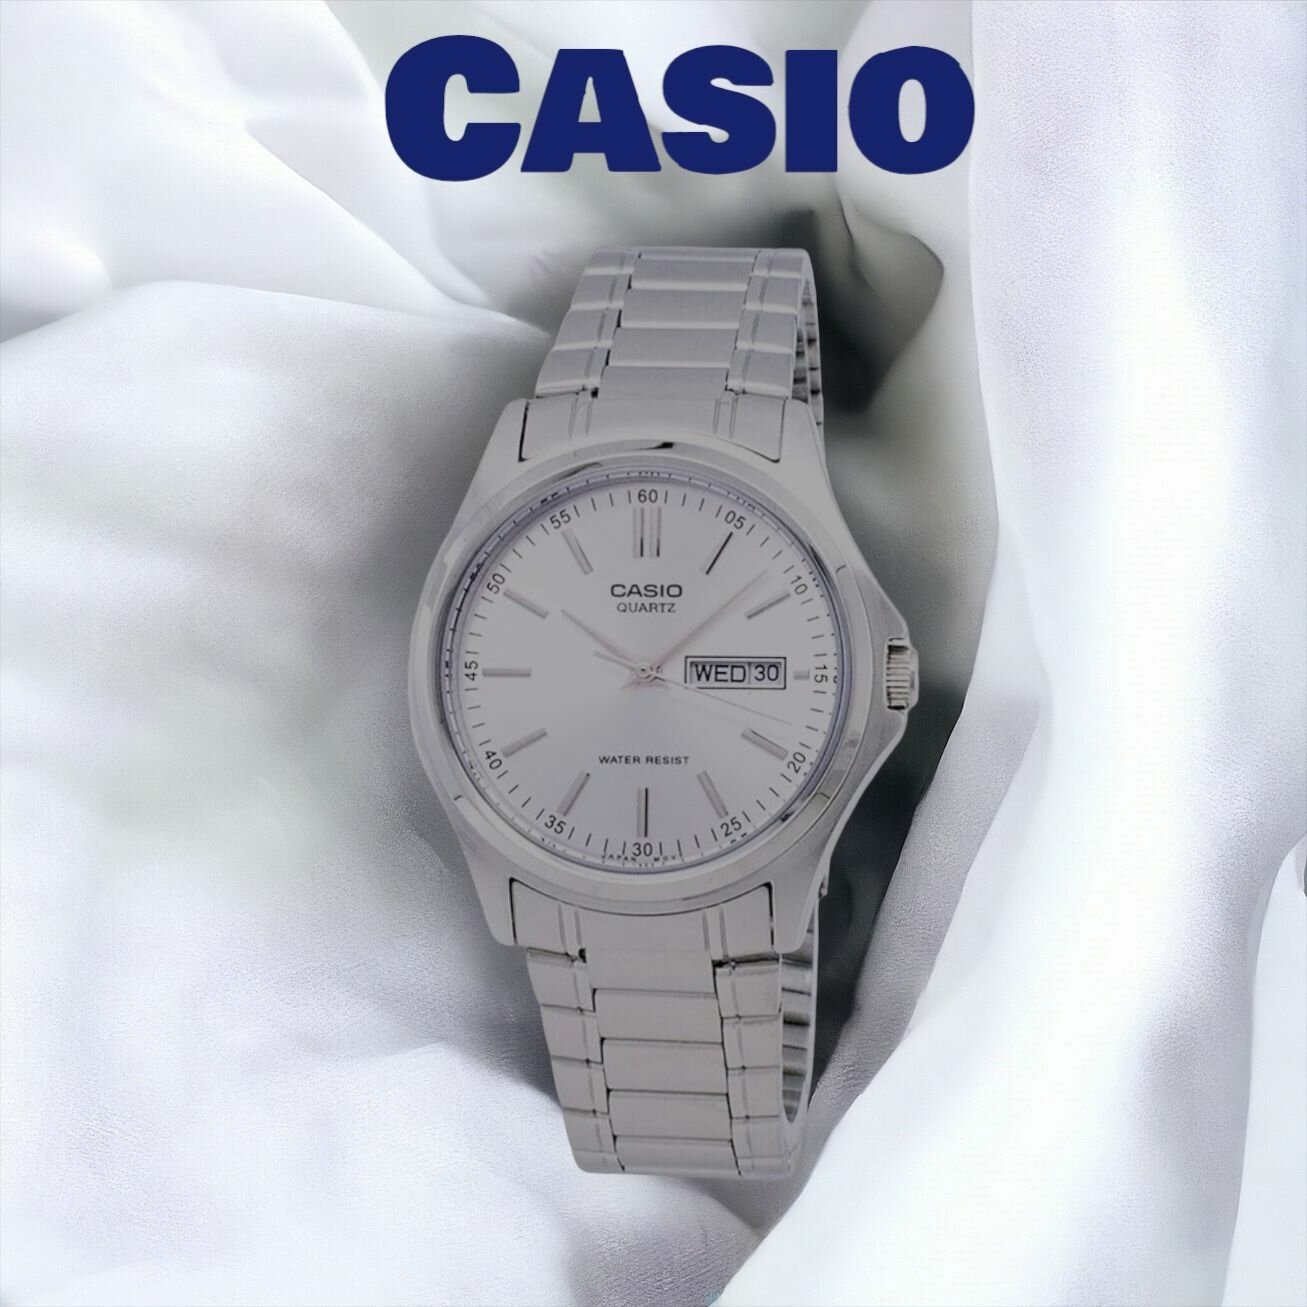 Наручные часы CASIO MTP-1239D-7A